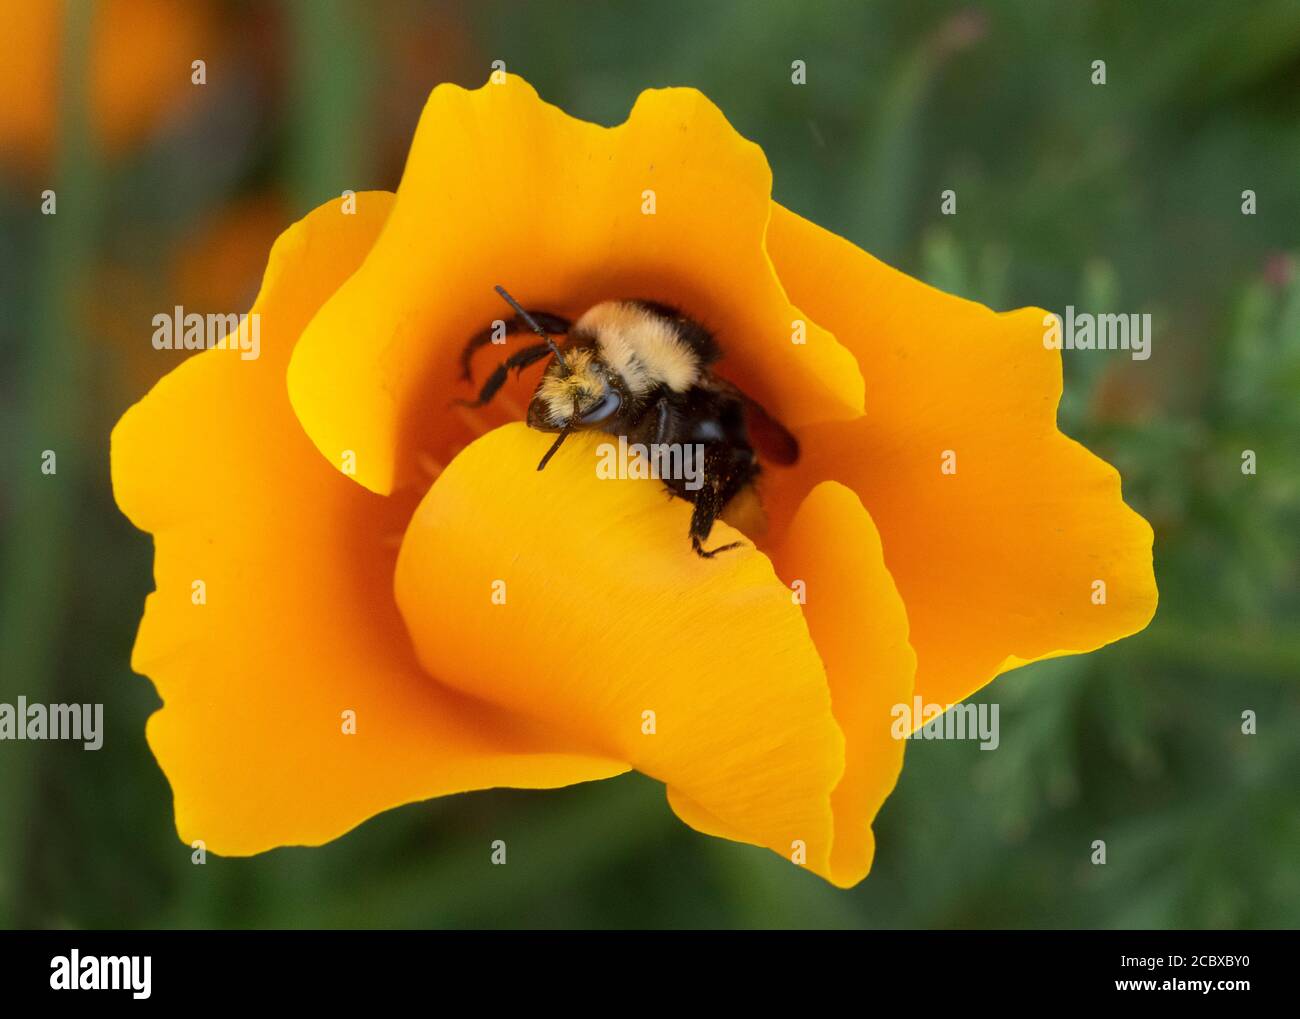 Yellow-faced Bumble Bee (Bombus vosnesenskii) gathering pollen in California Poppy flower Stock Photo